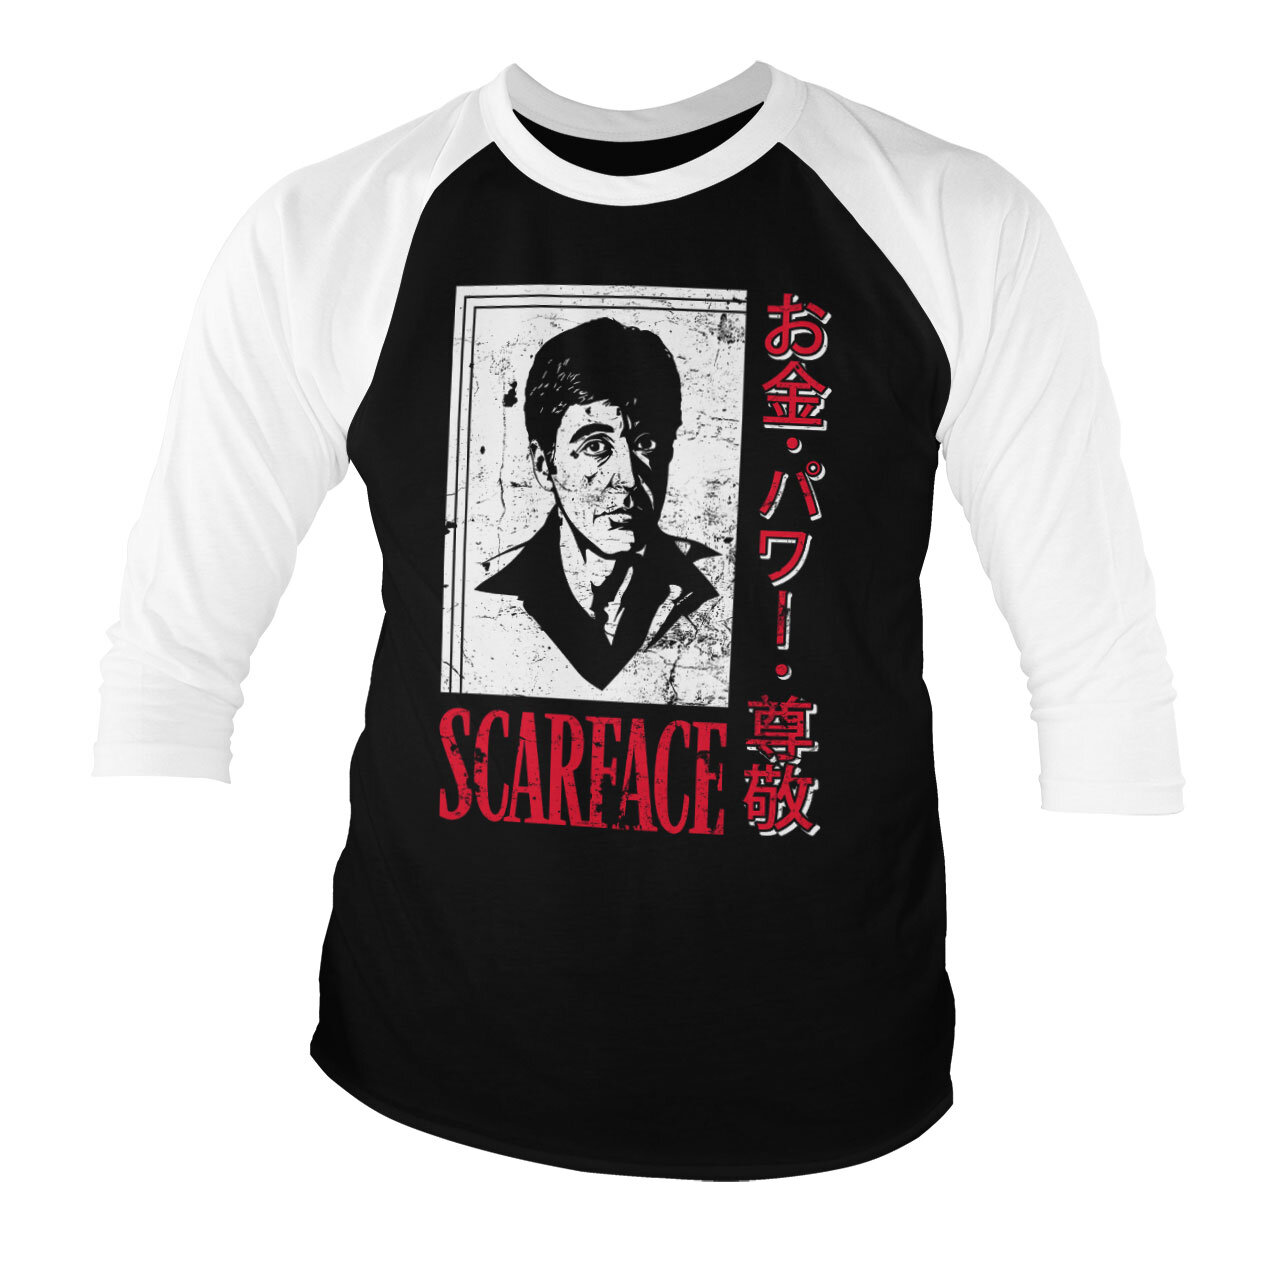 Scarface - Japanese Baseball 3/4 Sleeve Tee